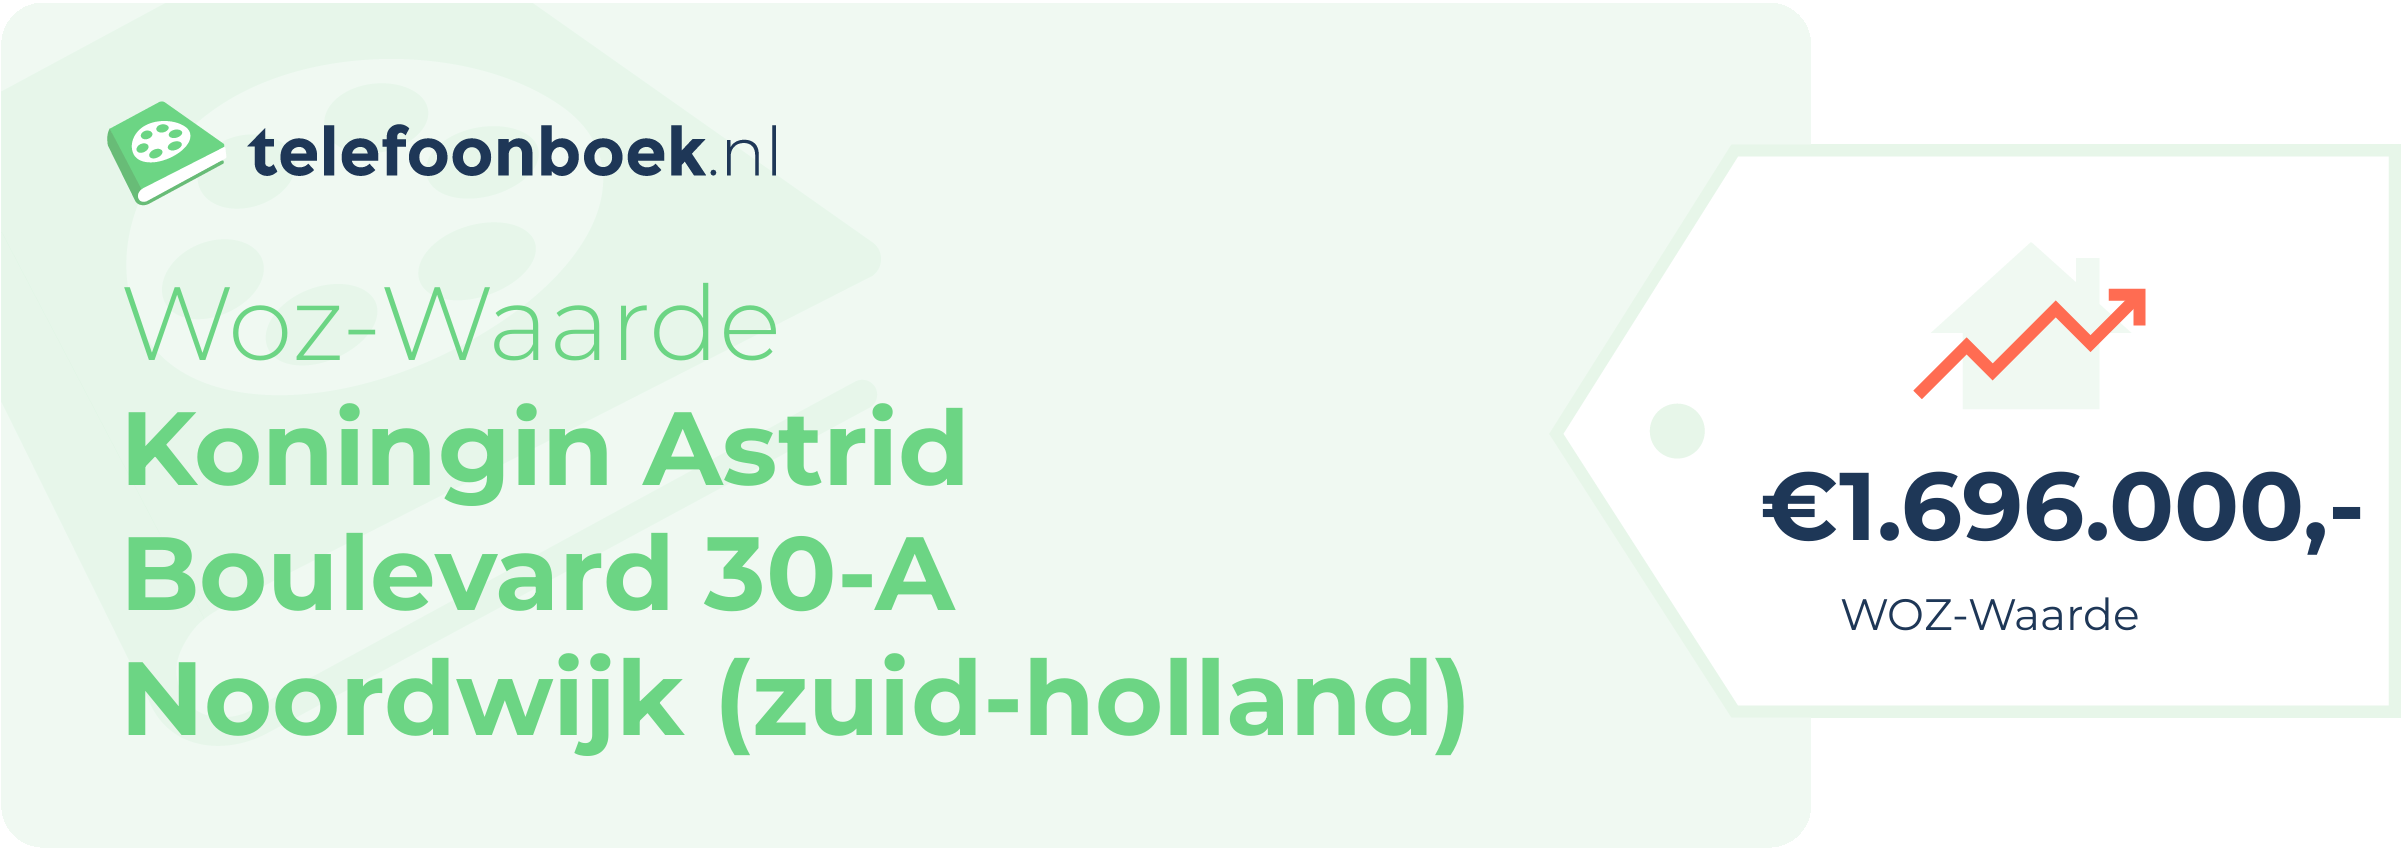 WOZ-waarde Koningin Astrid Boulevard 30-A Noordwijk (Zuid-Holland)